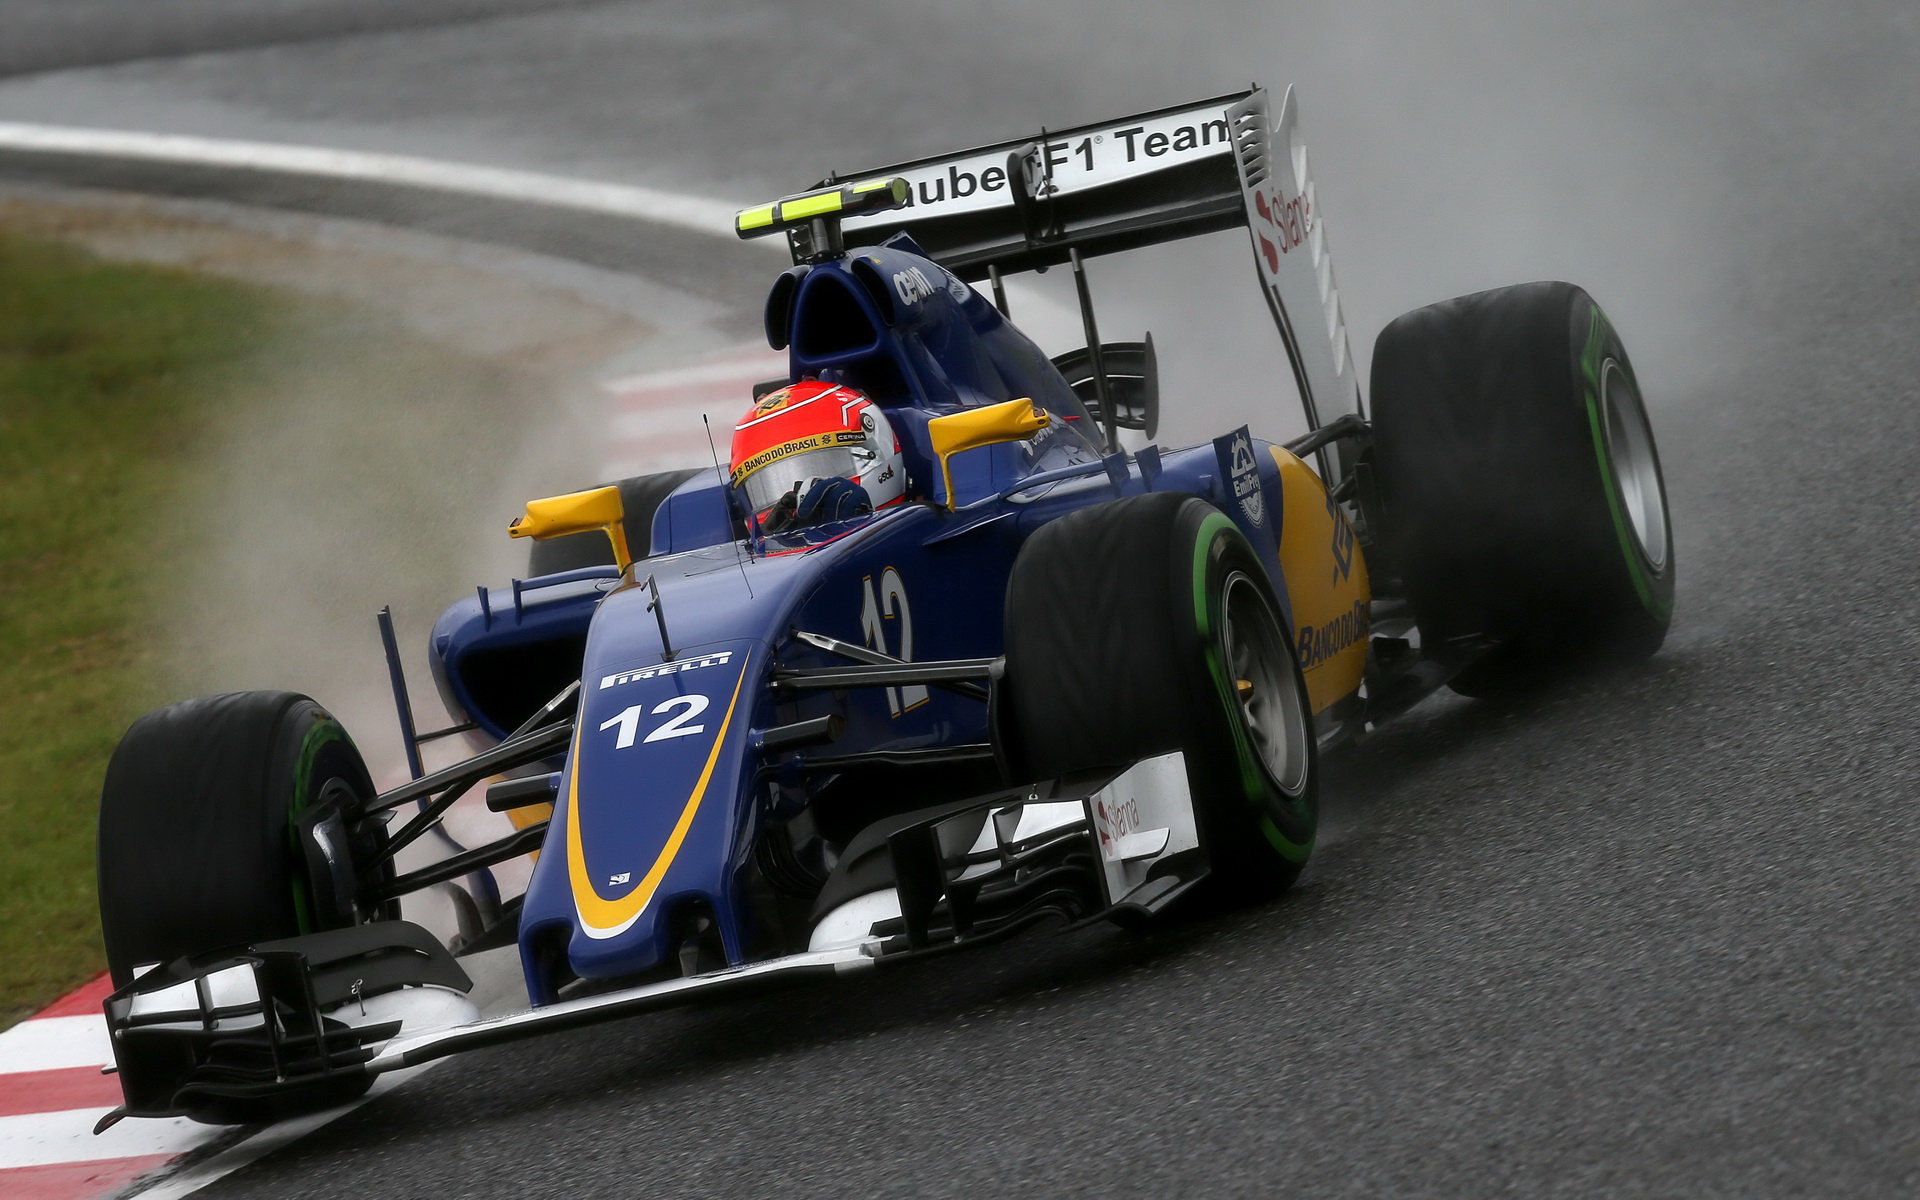 Felipe Nasr, GP Japonska (Suzuka)